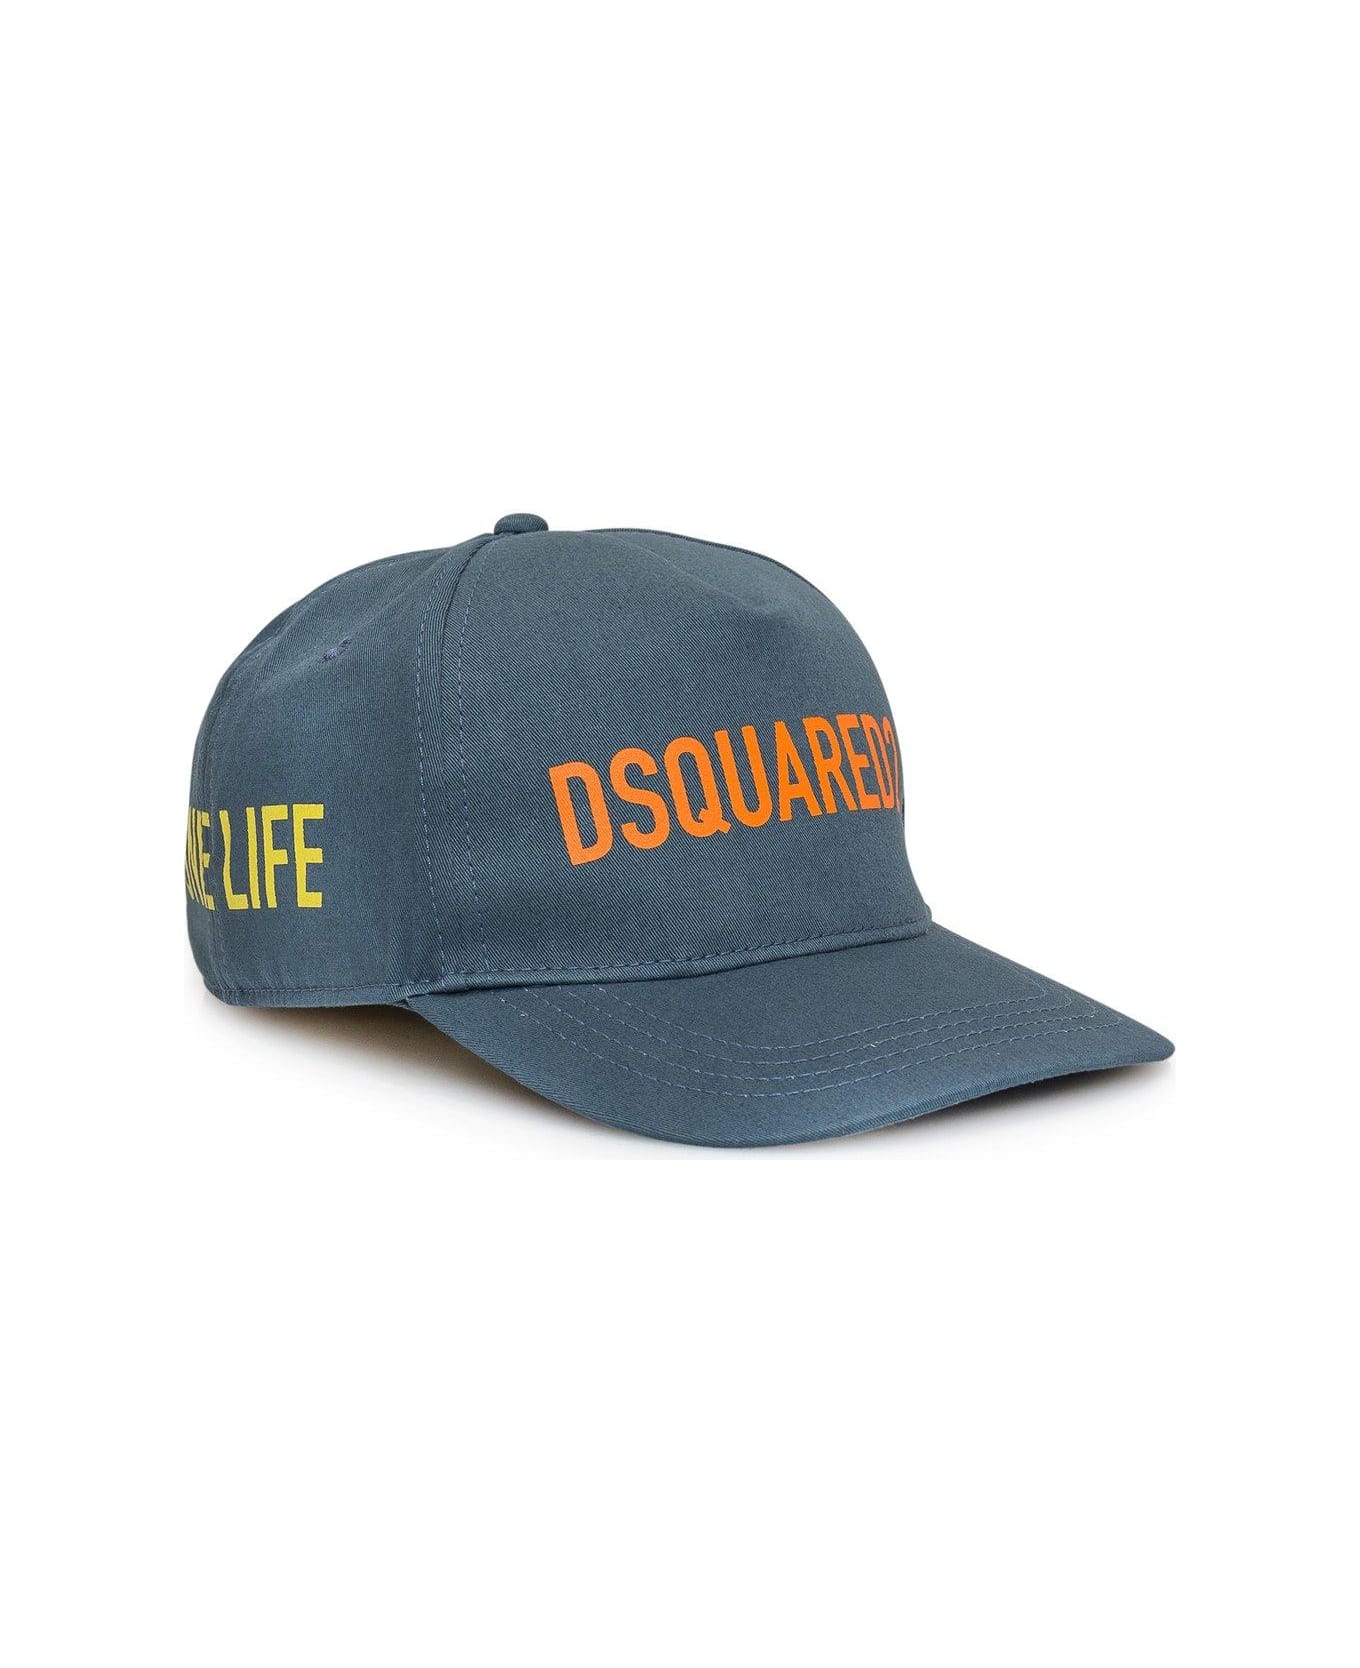 Dsquared2 One Life Logo Printed Baseball Cap - Green